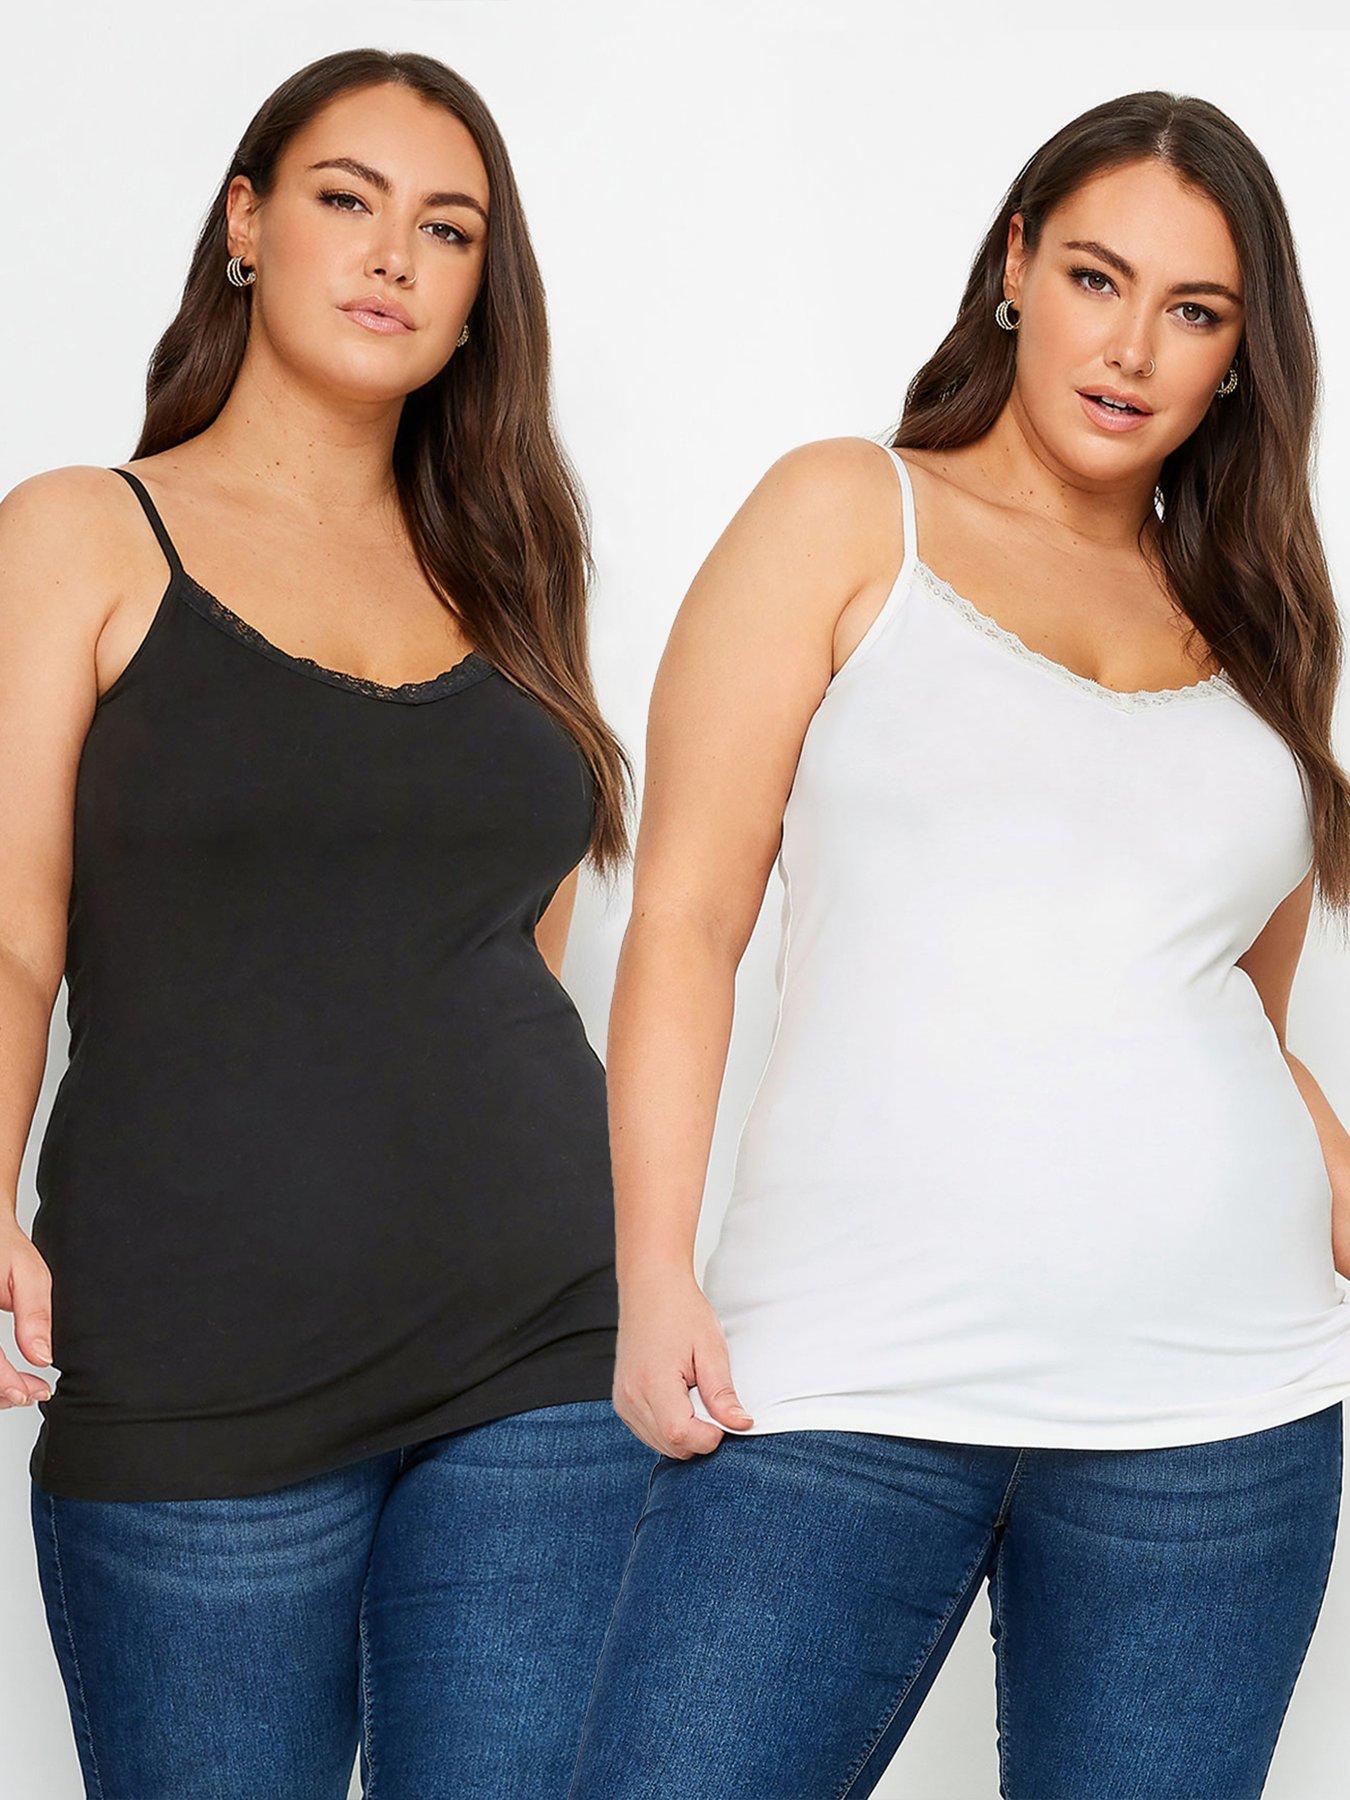 BERKSHIRE Women's Curves Slimming Tummy Control Shapewear Tank Top